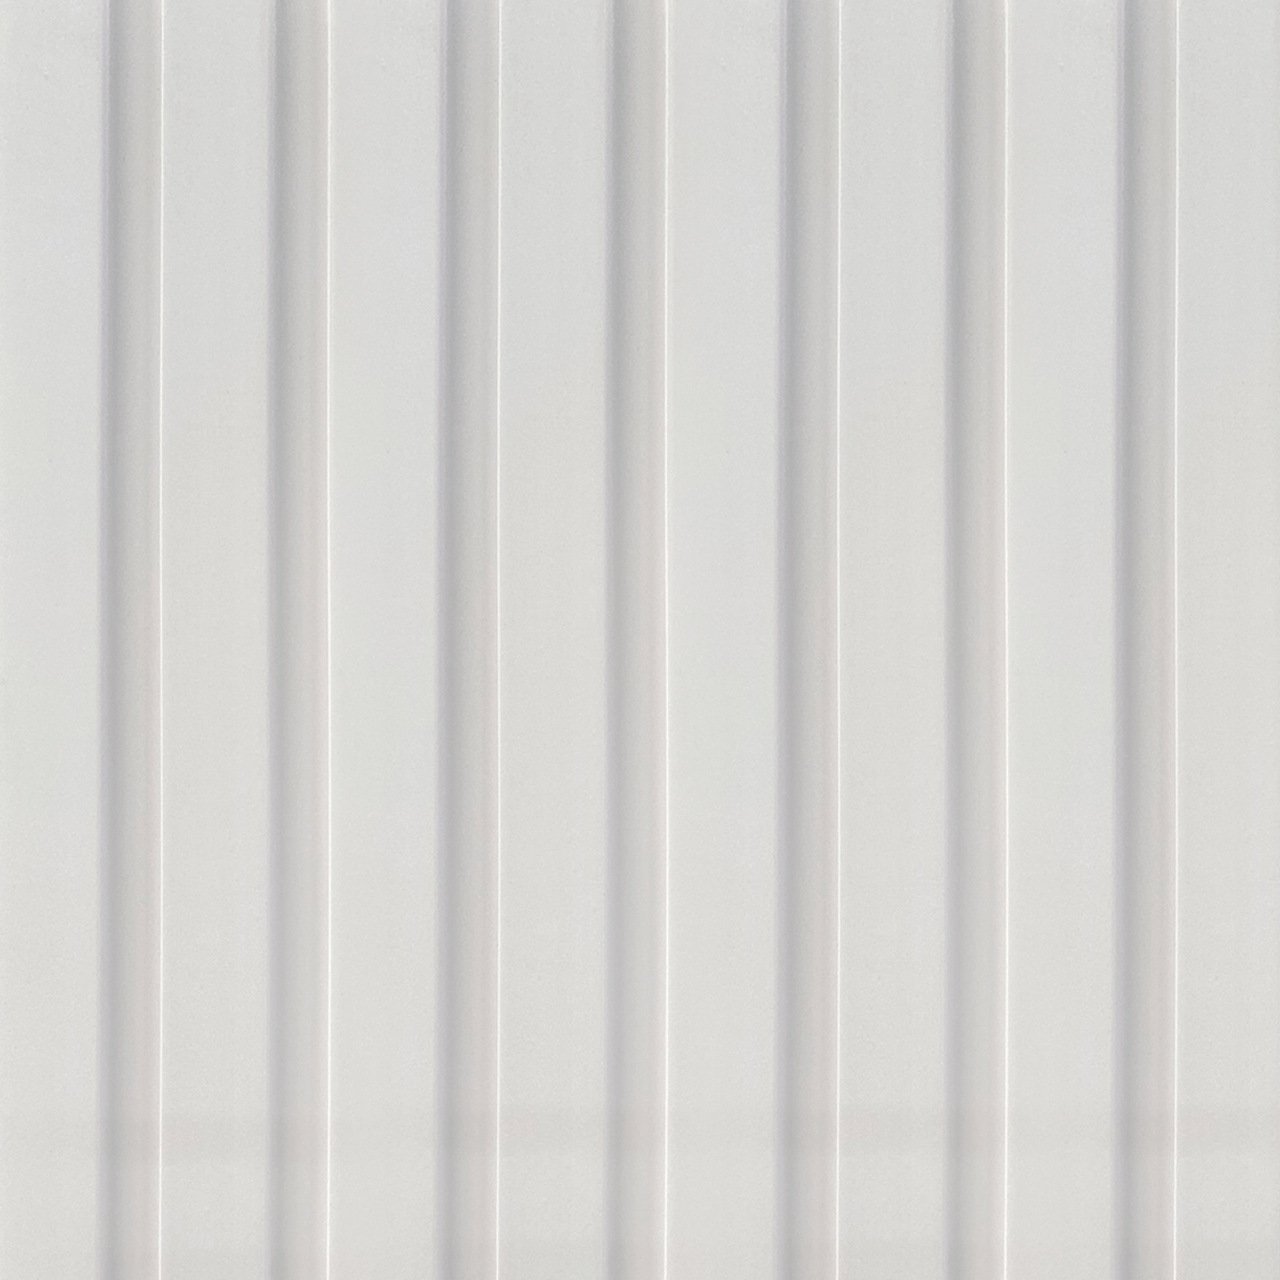 Painel Ripado Wpc Interno Wide Cor: Branco Absoluto 2,90m X 19cm (0,55m²) - 1